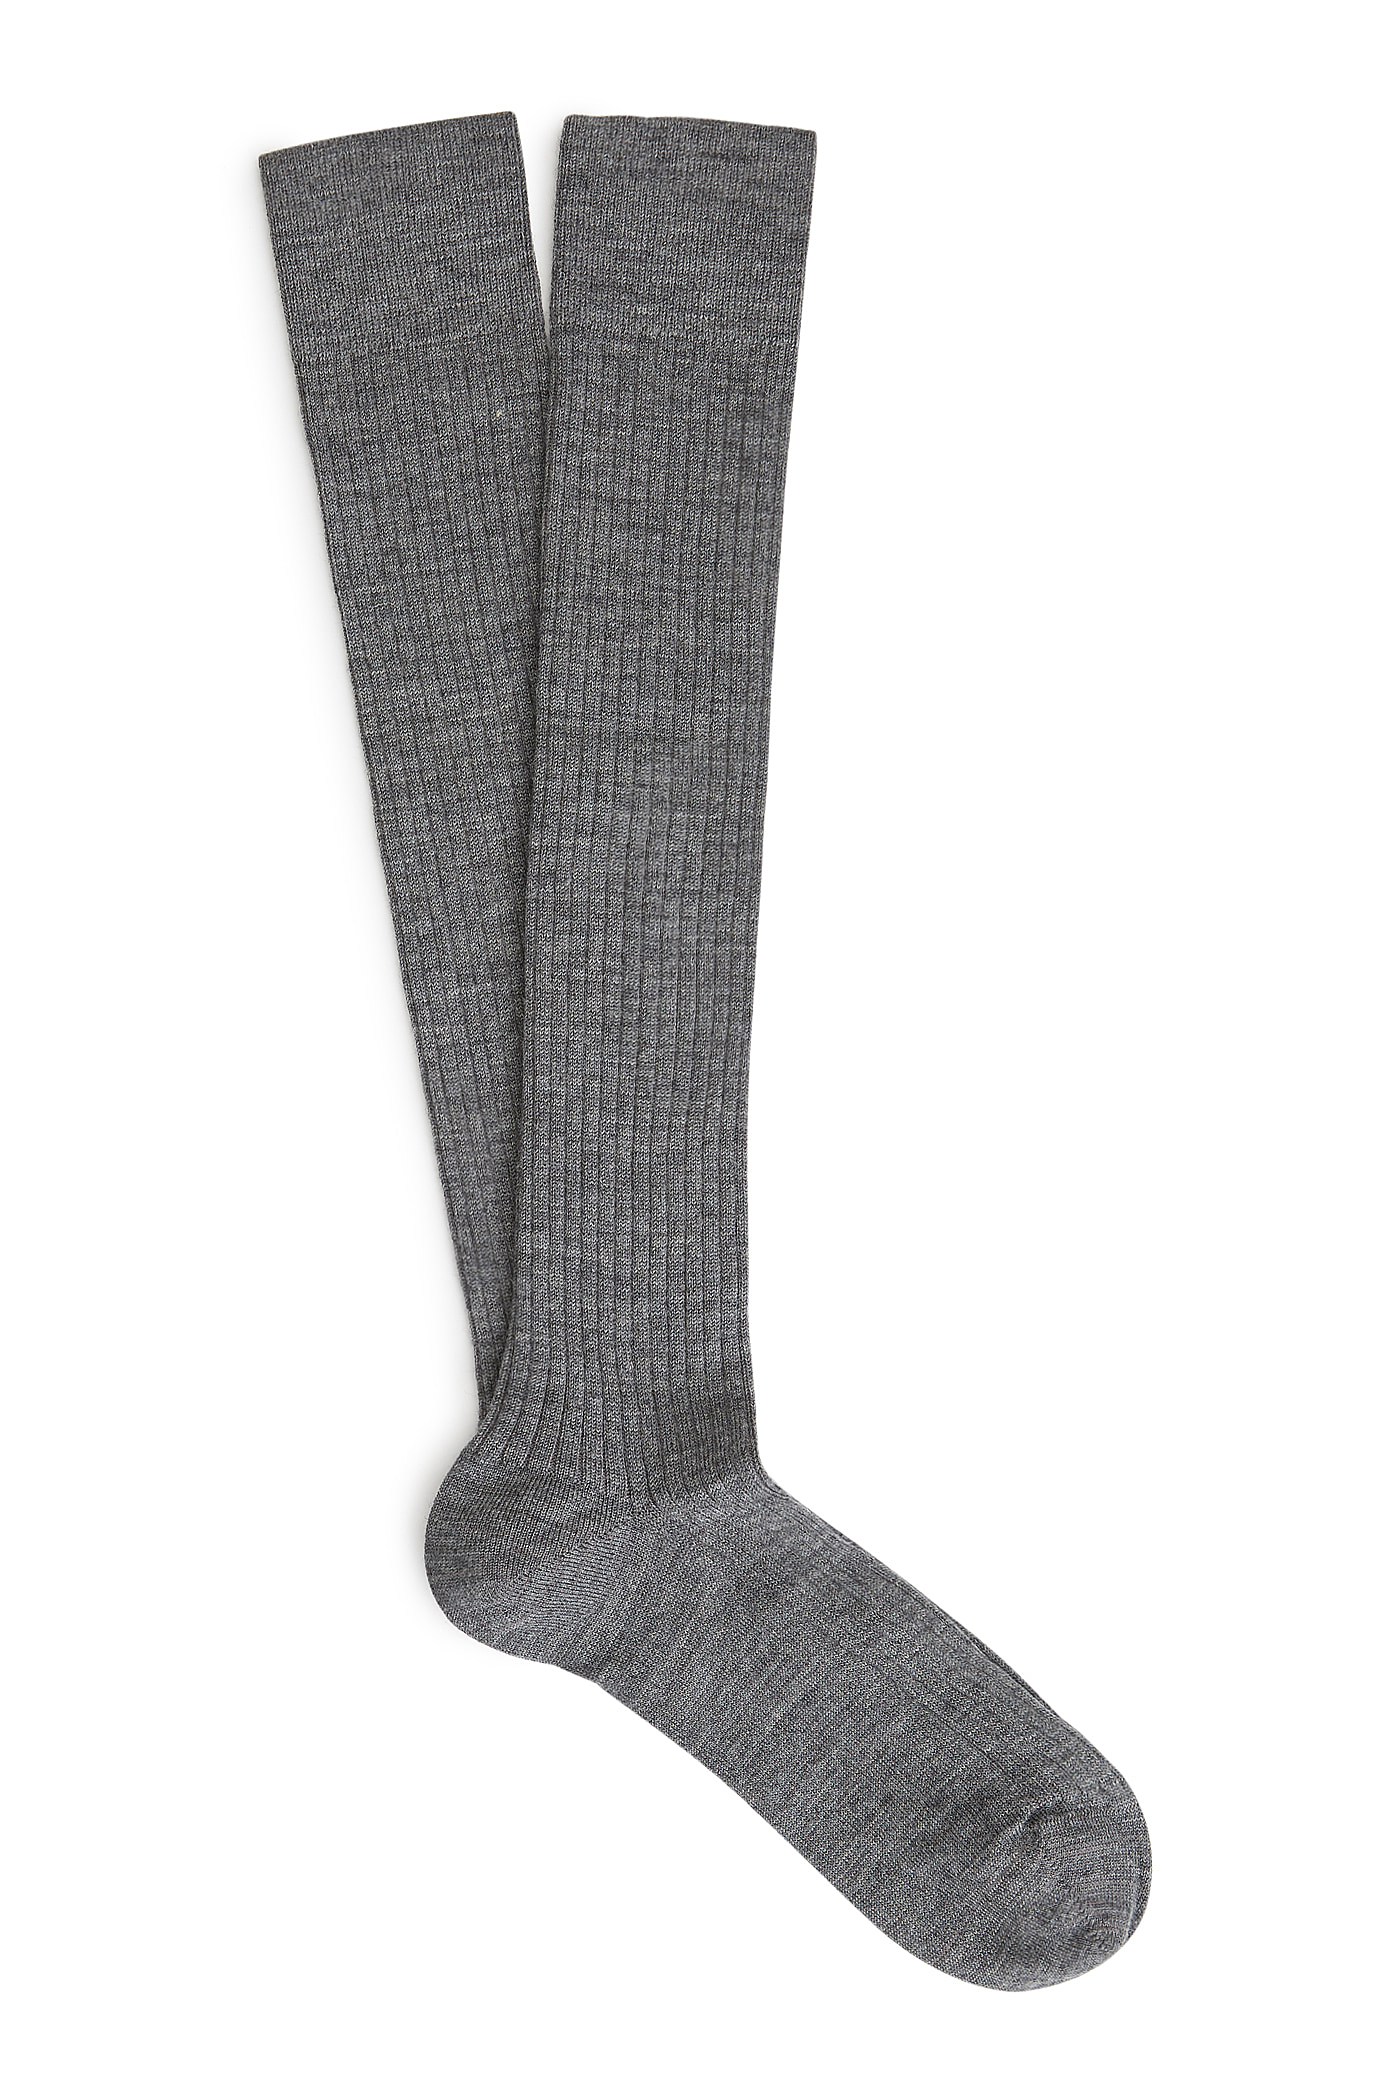 Mid Grey Long Wool Socks | New & Lingwood